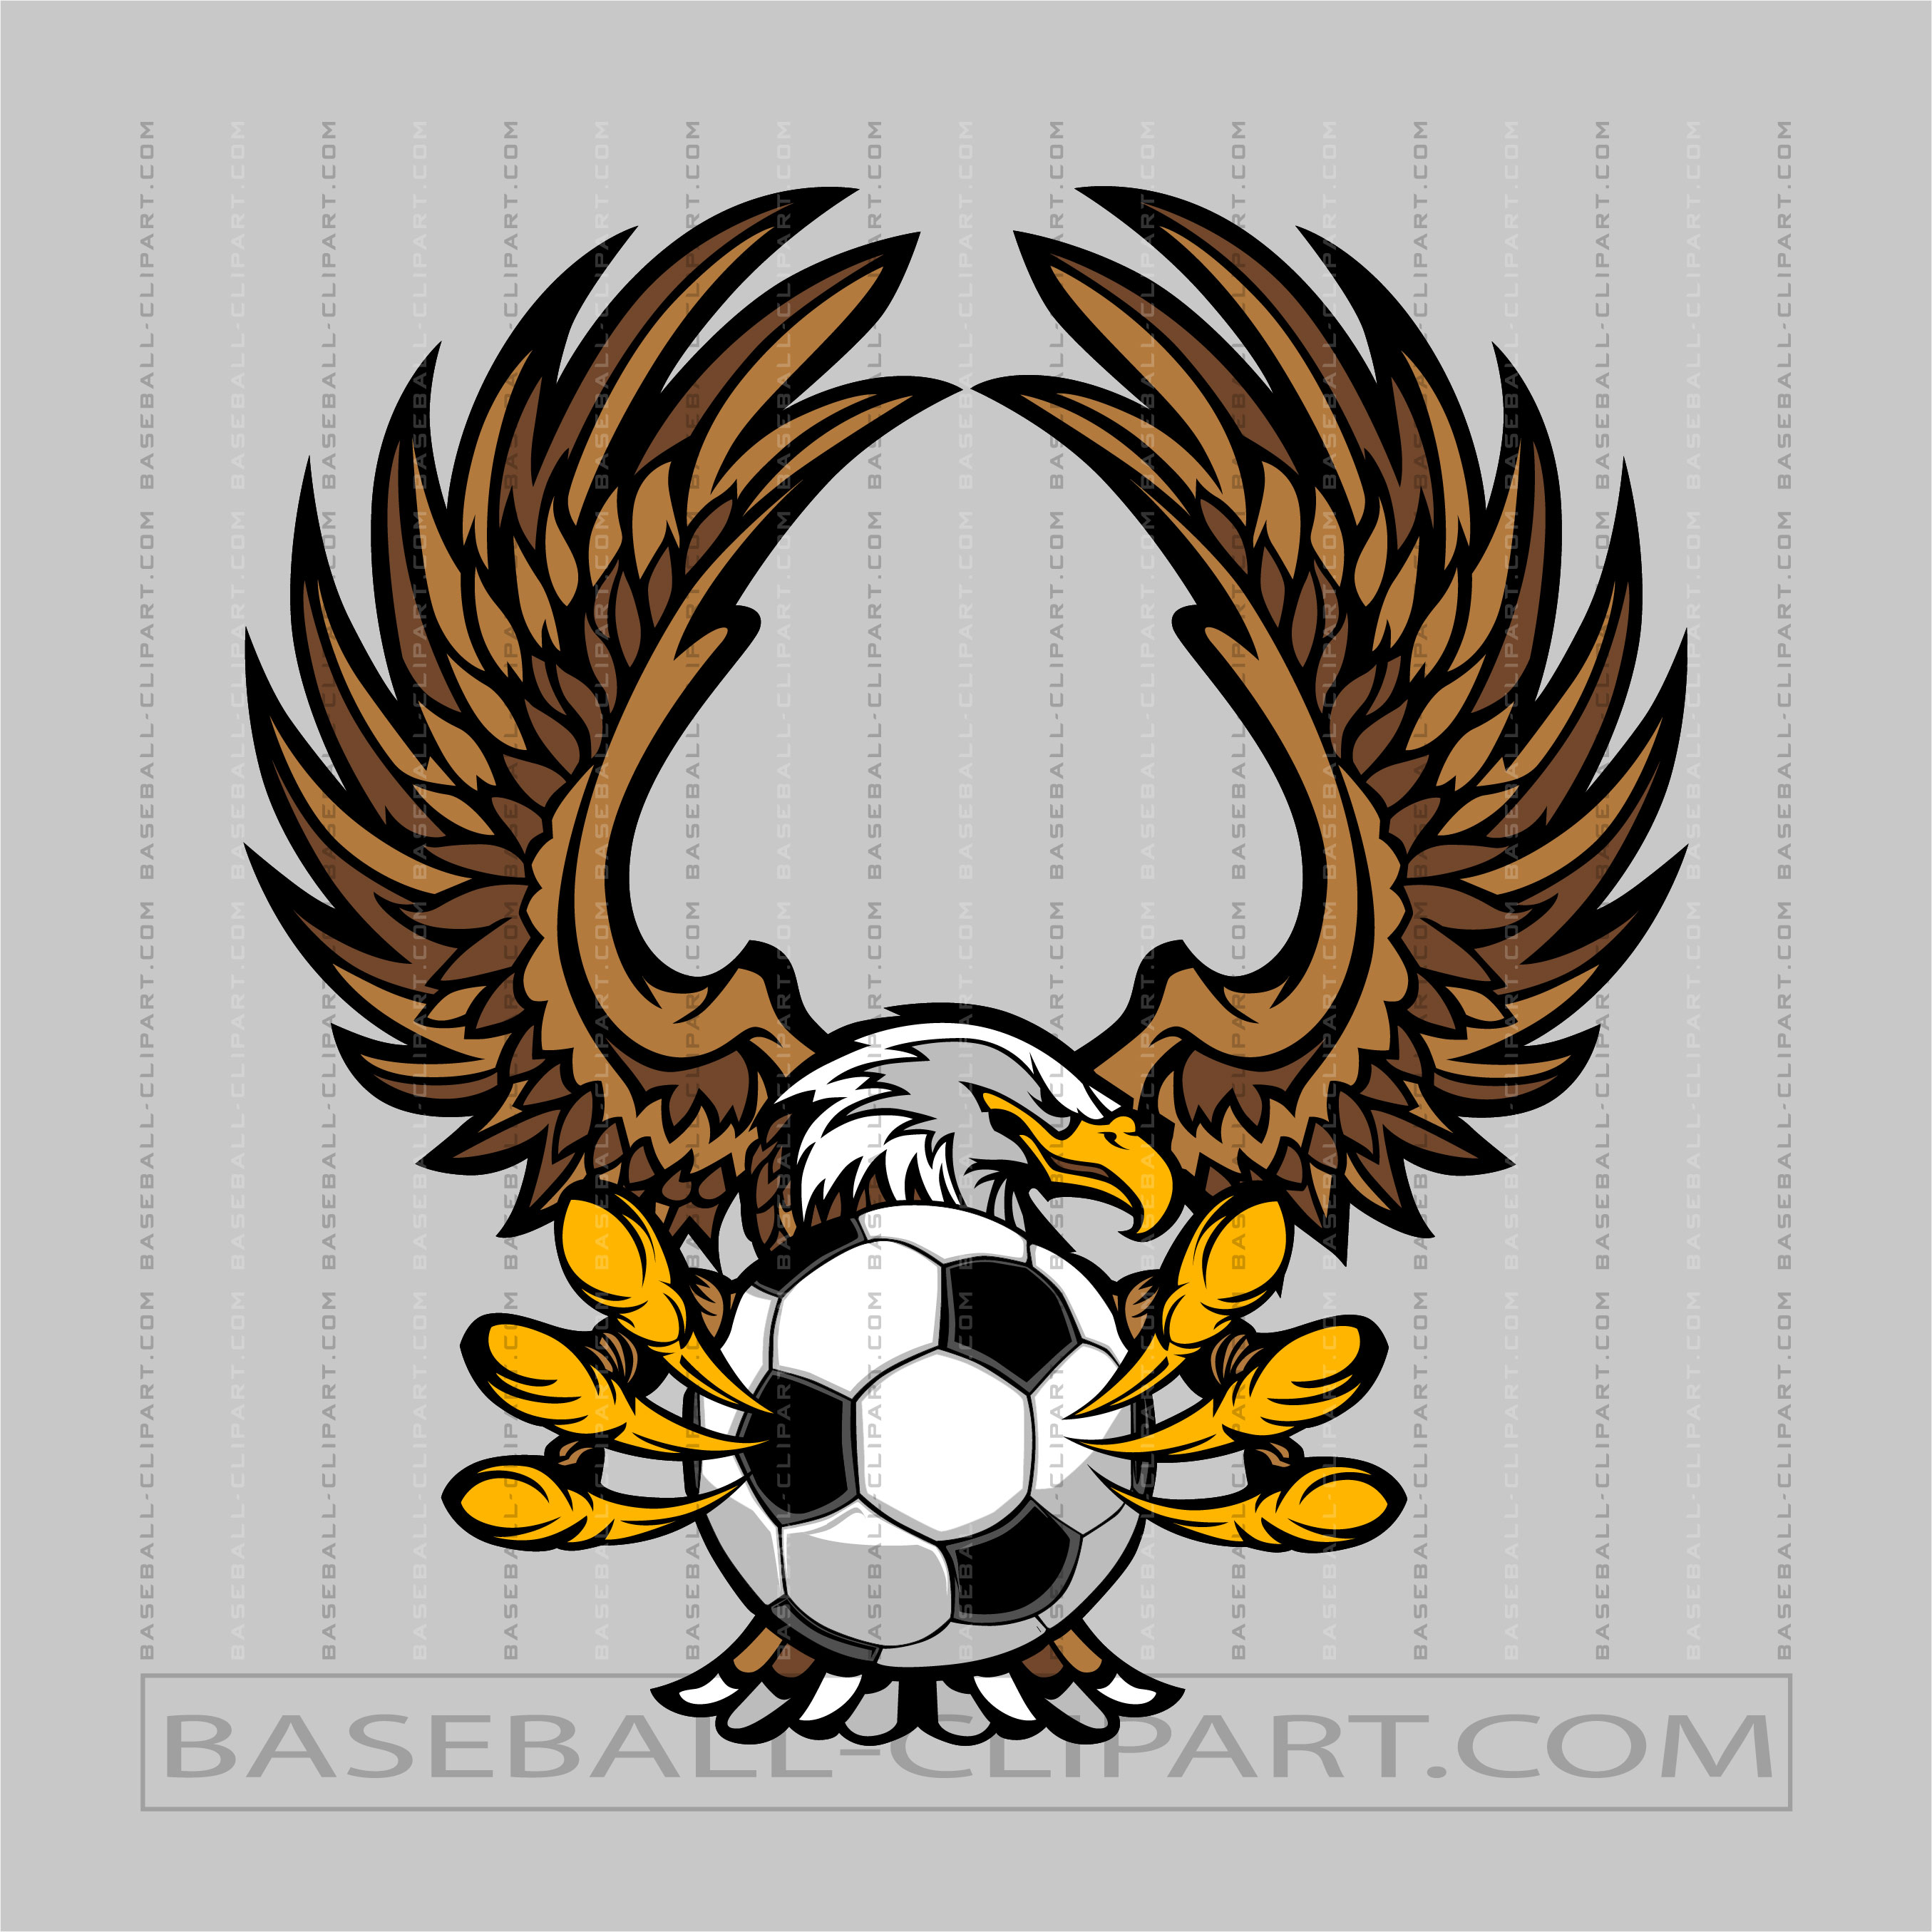 Eagles Soccer